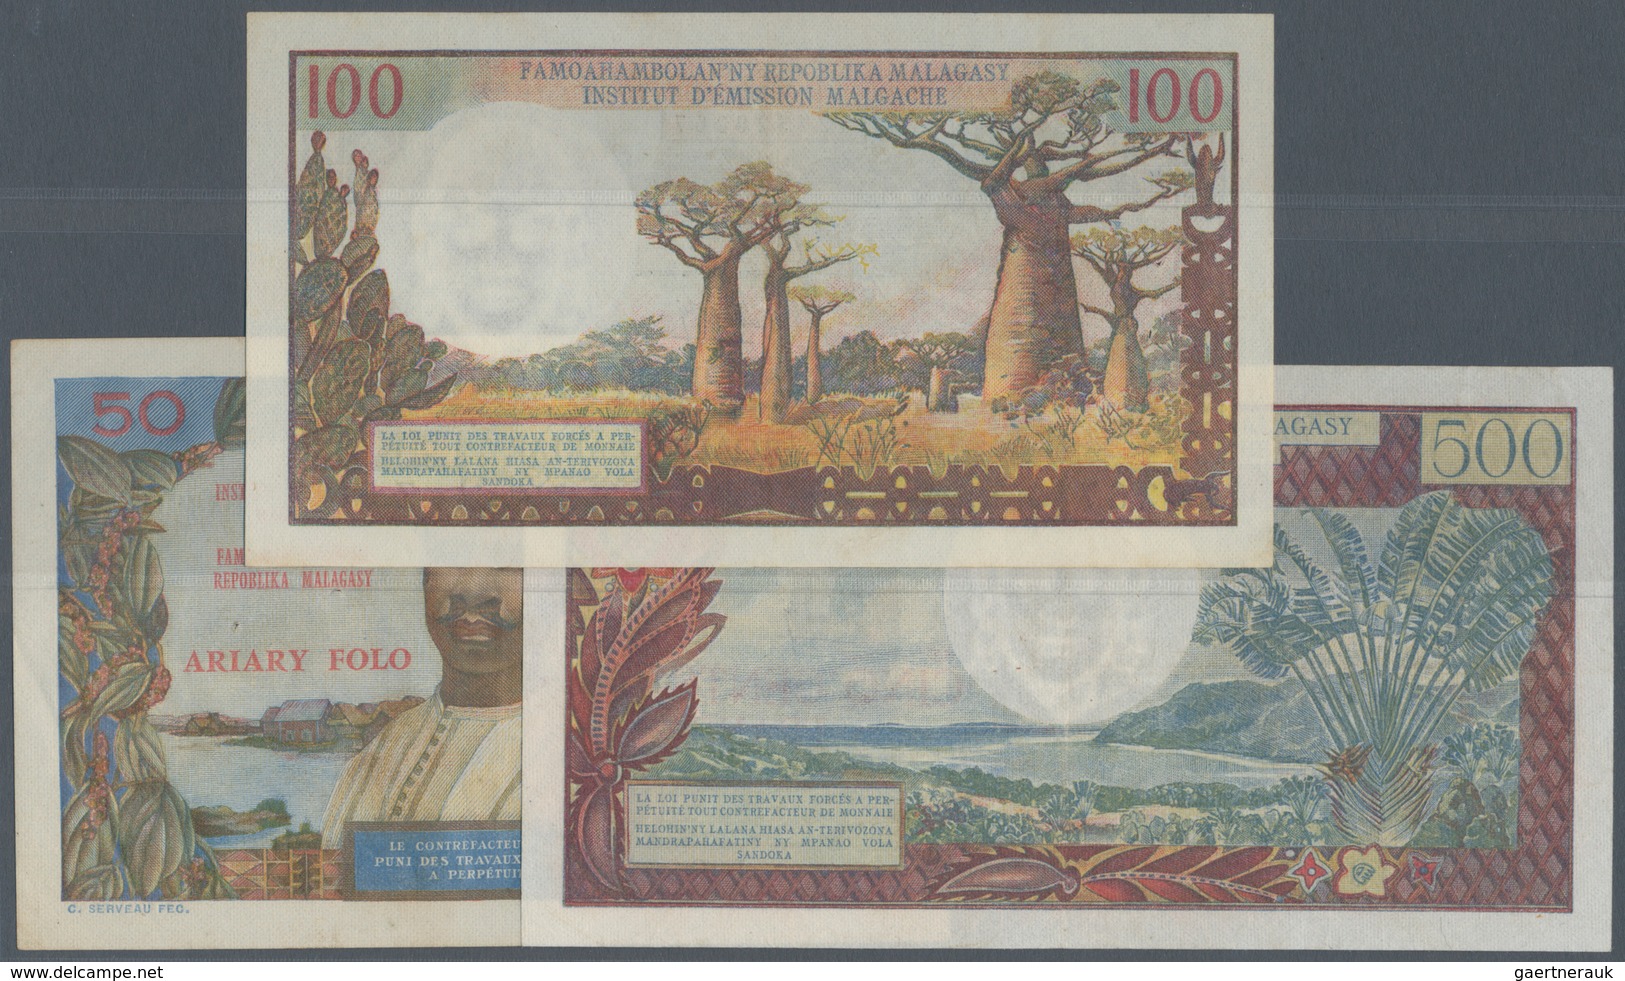 Madagascar: Set Of 3 Banknotes Containing 100 Francs ND(1966) P. 58, A Few Pinholes At Left, Crispne - Madagascar